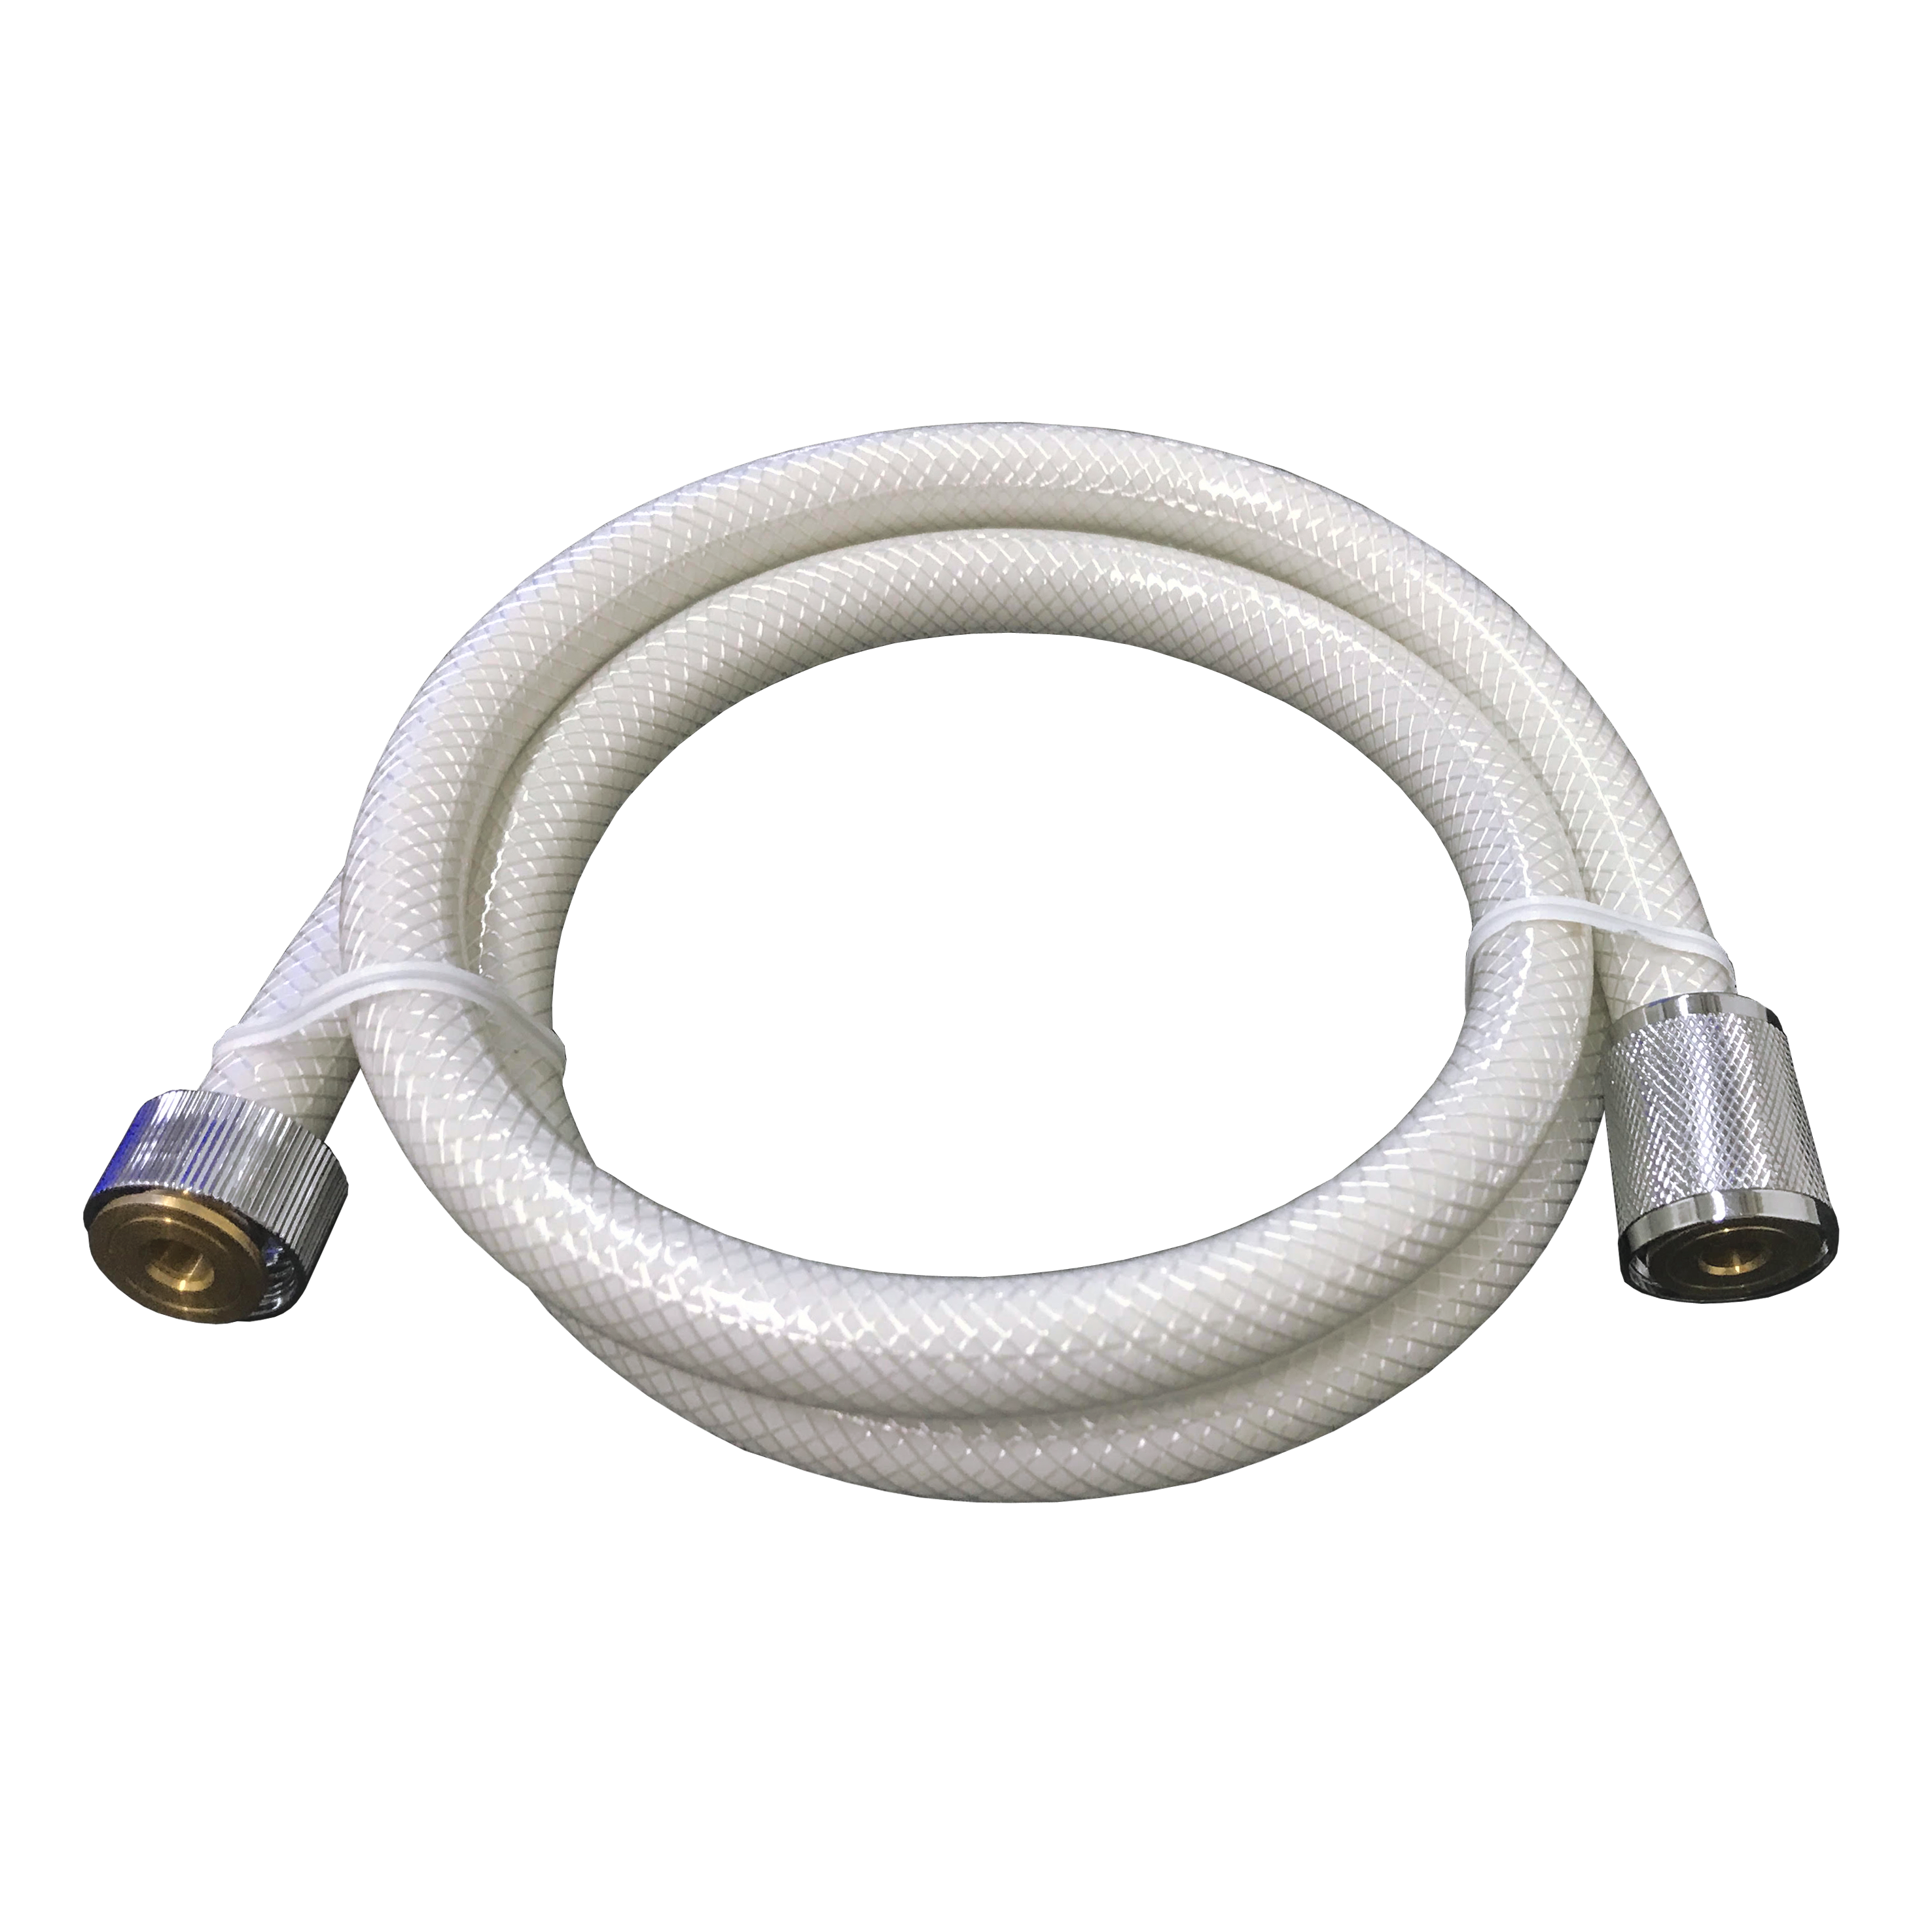 HUSKY 612-1.5m (5' PVC Flexible Hose (White))